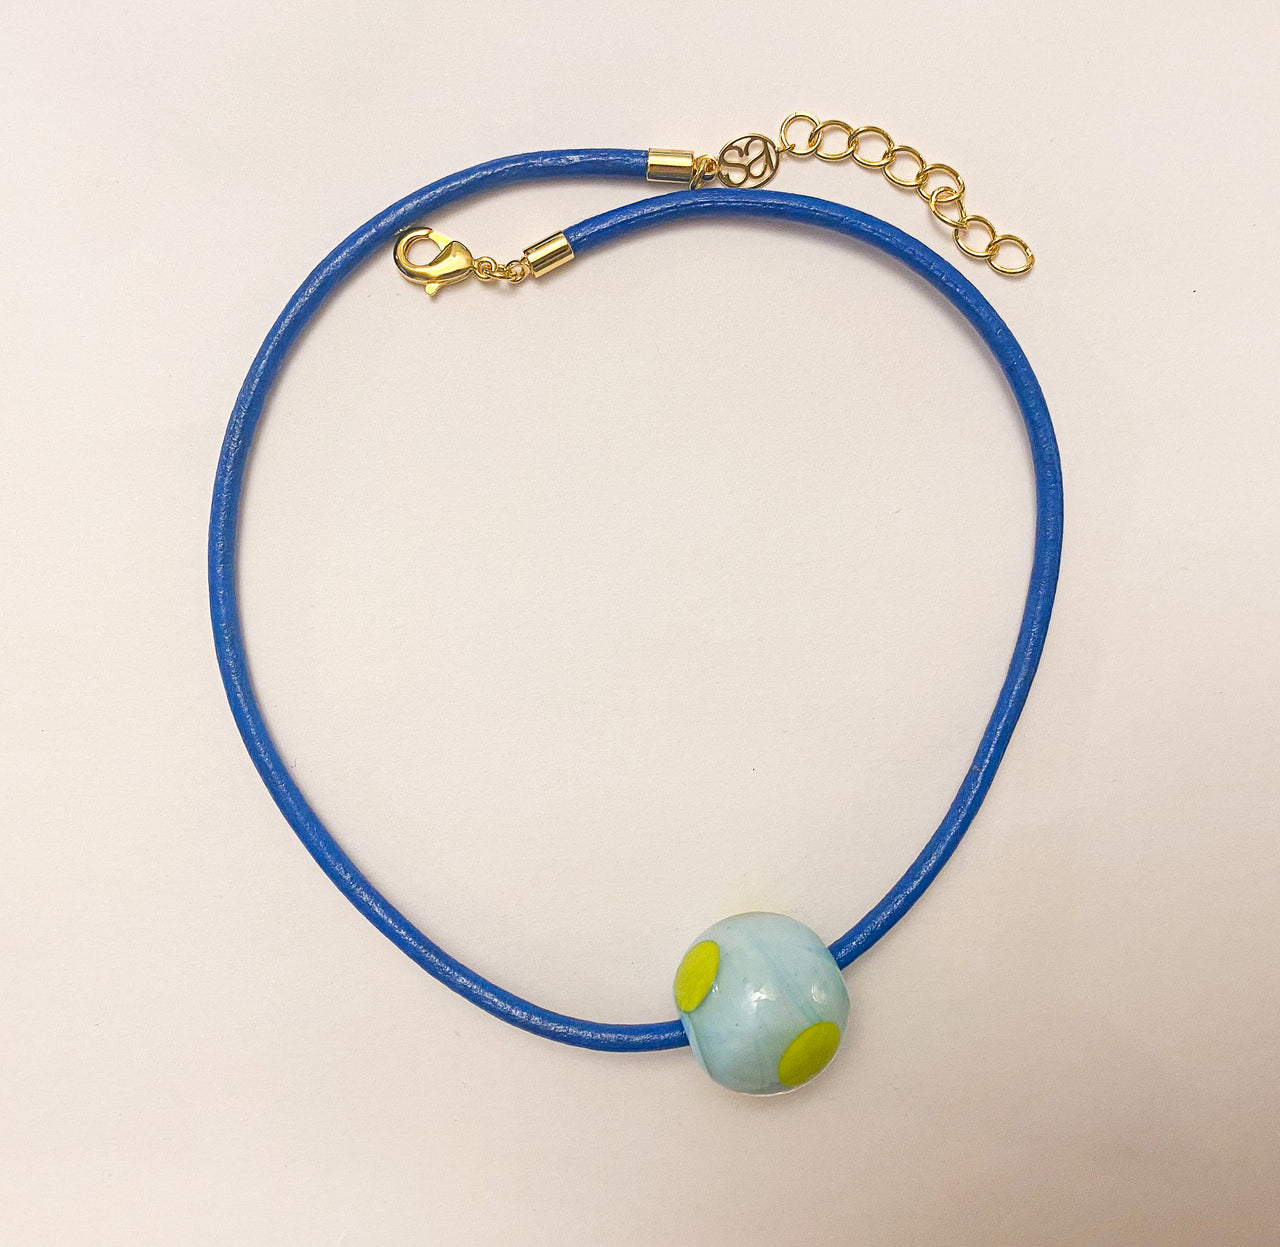 Komboloi Leather Cord Choker Necklace Blue - SAMPLE